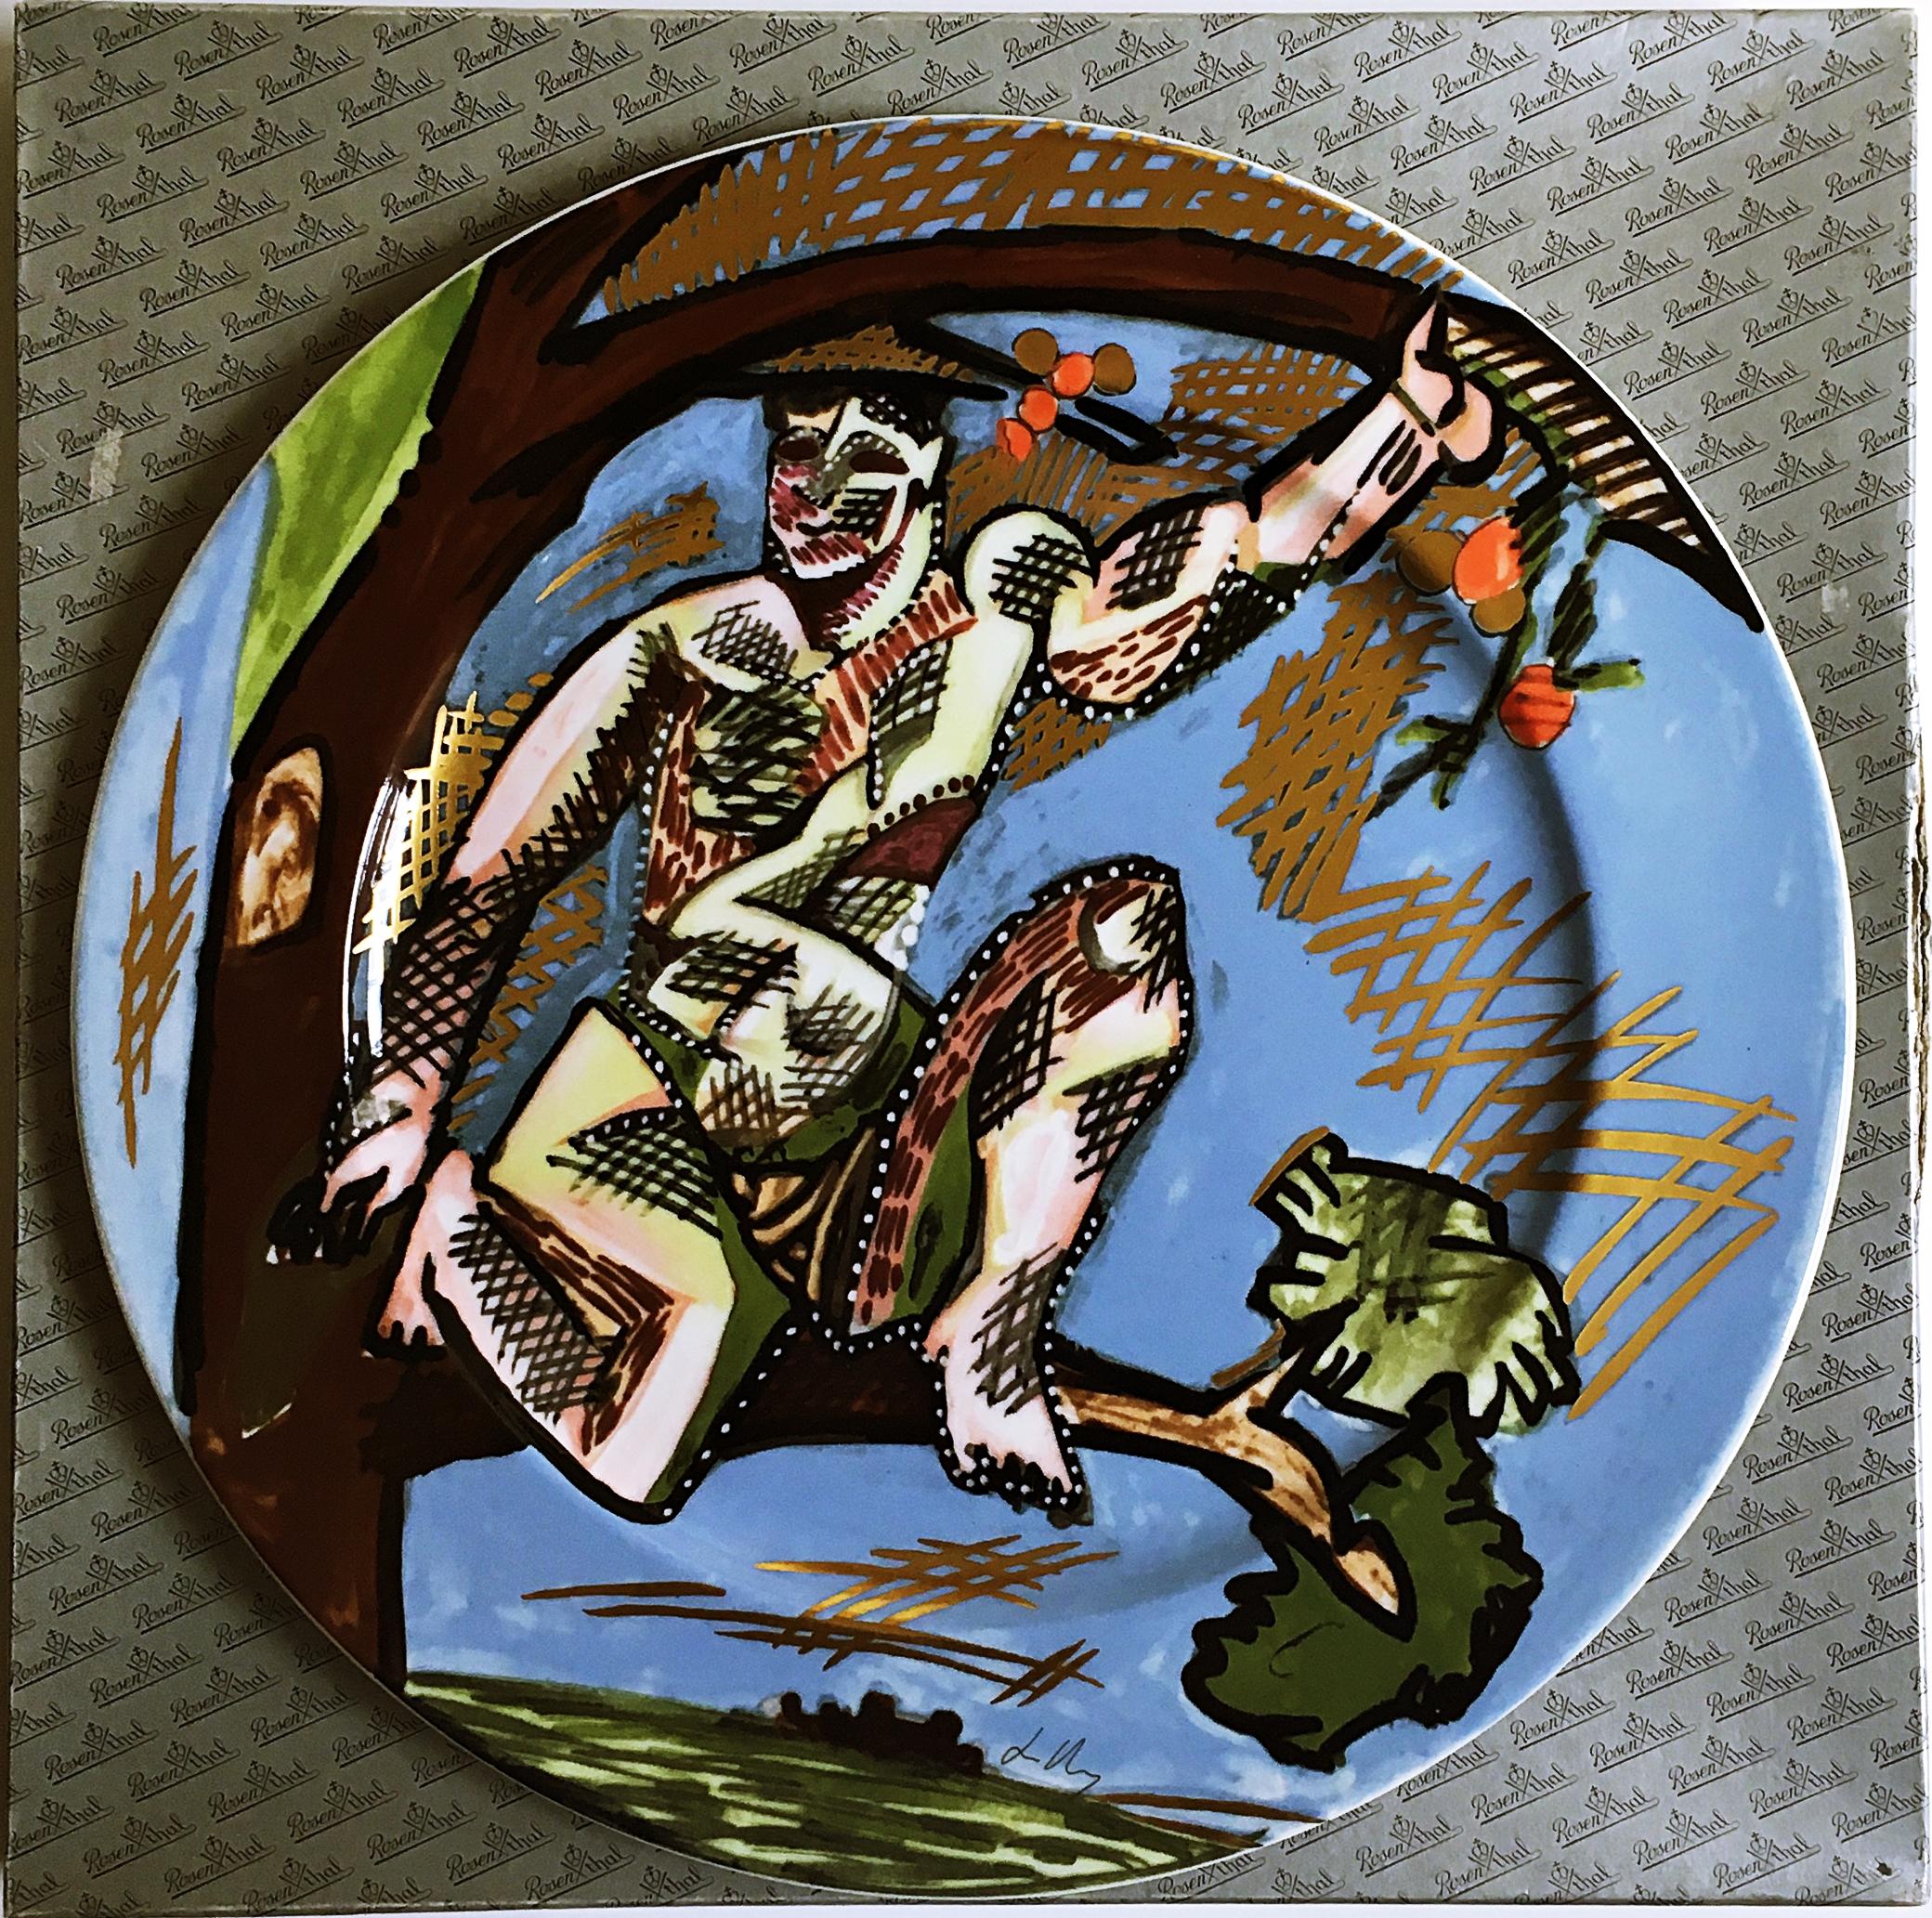 Kunstlerplatzteller Artists ceramic plate by Rosenthal, Inc For Sale 5